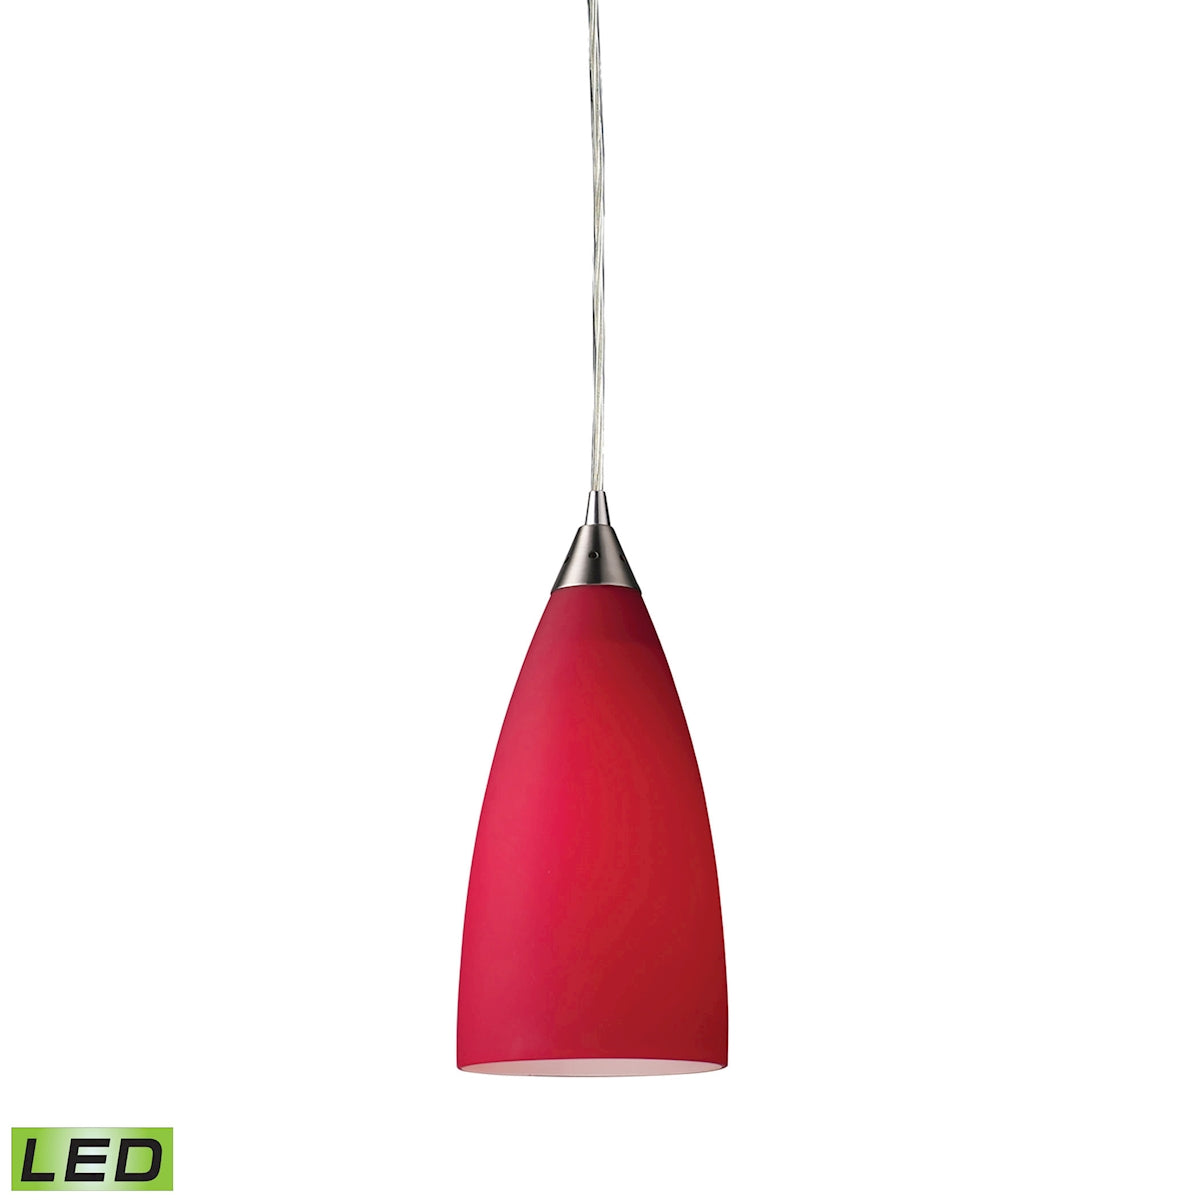 ELK Lighting 2583/1-LED Vesta 1-Light Mini Pendant in Satin Nickel with Cardinal Red Glass - Includes LED Bulb